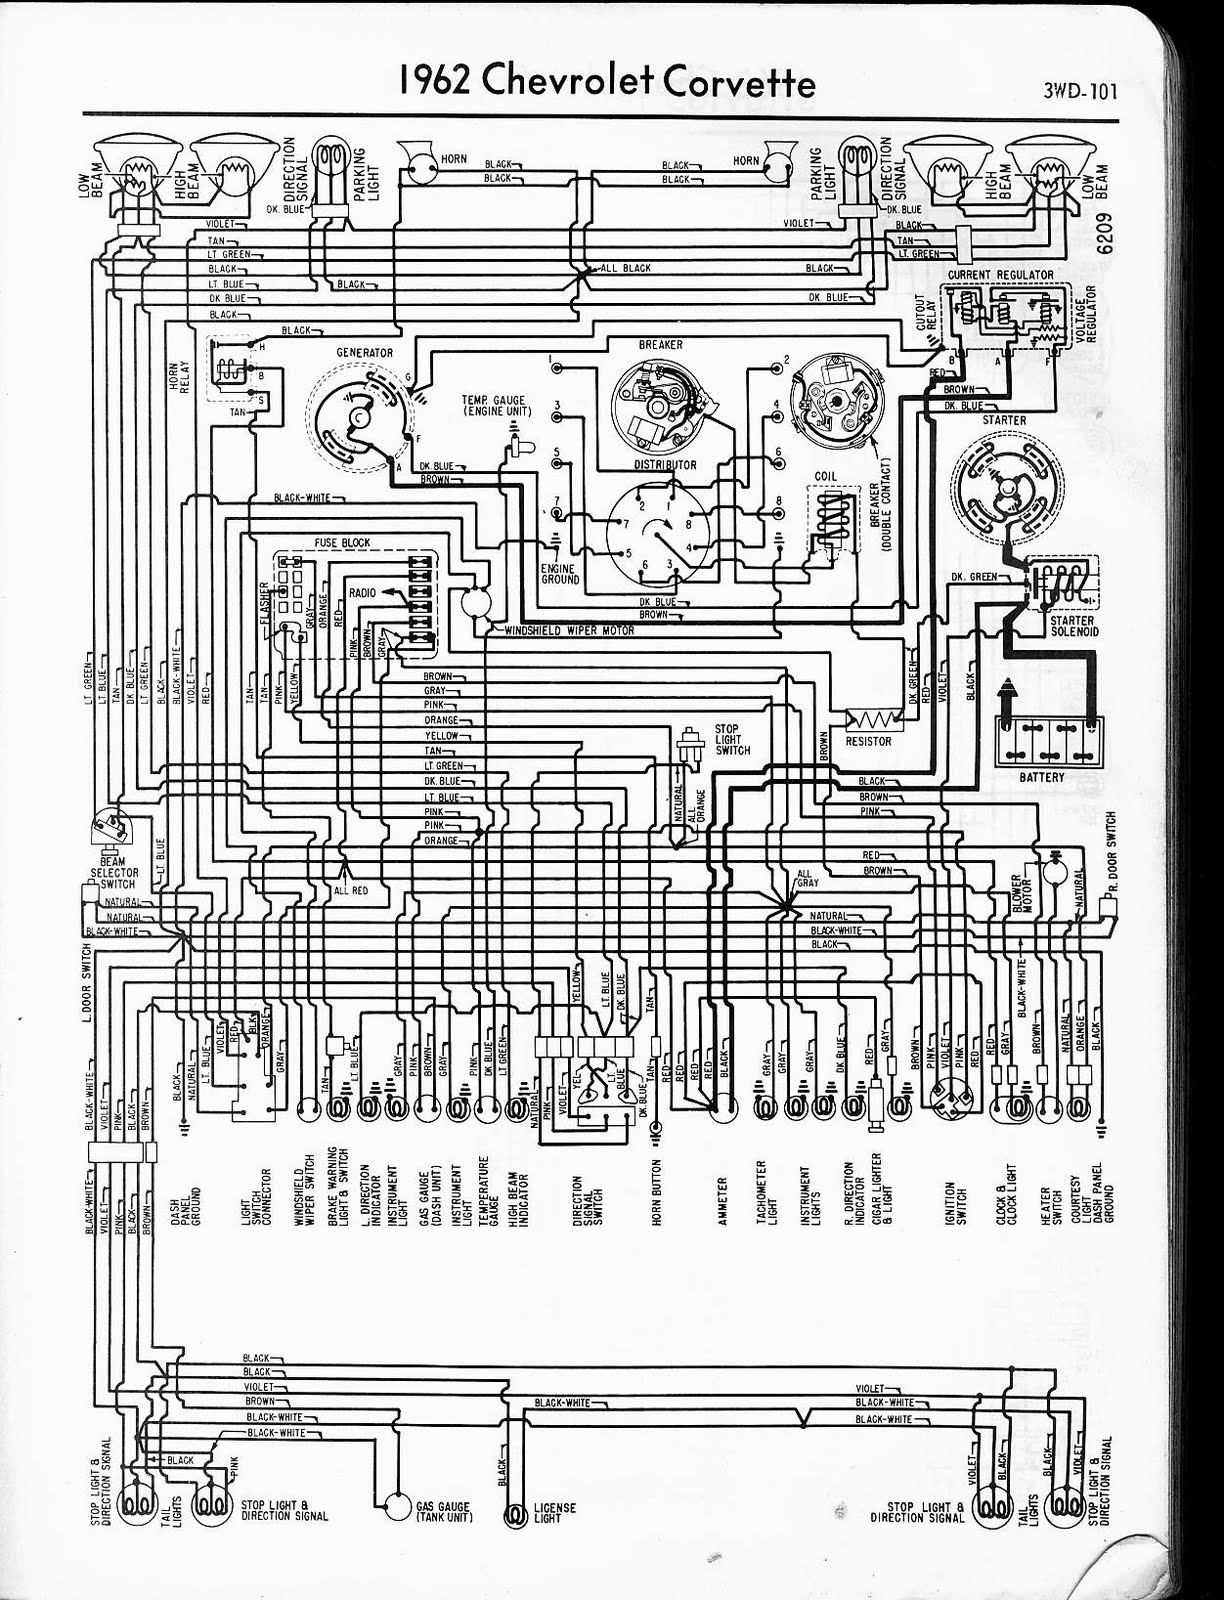 Free Auto Electrical Wiring Diagrams Wiring Diagram Of Refrigerator Compressor Dodyjm Nescafe Jeanjaures37 Fr